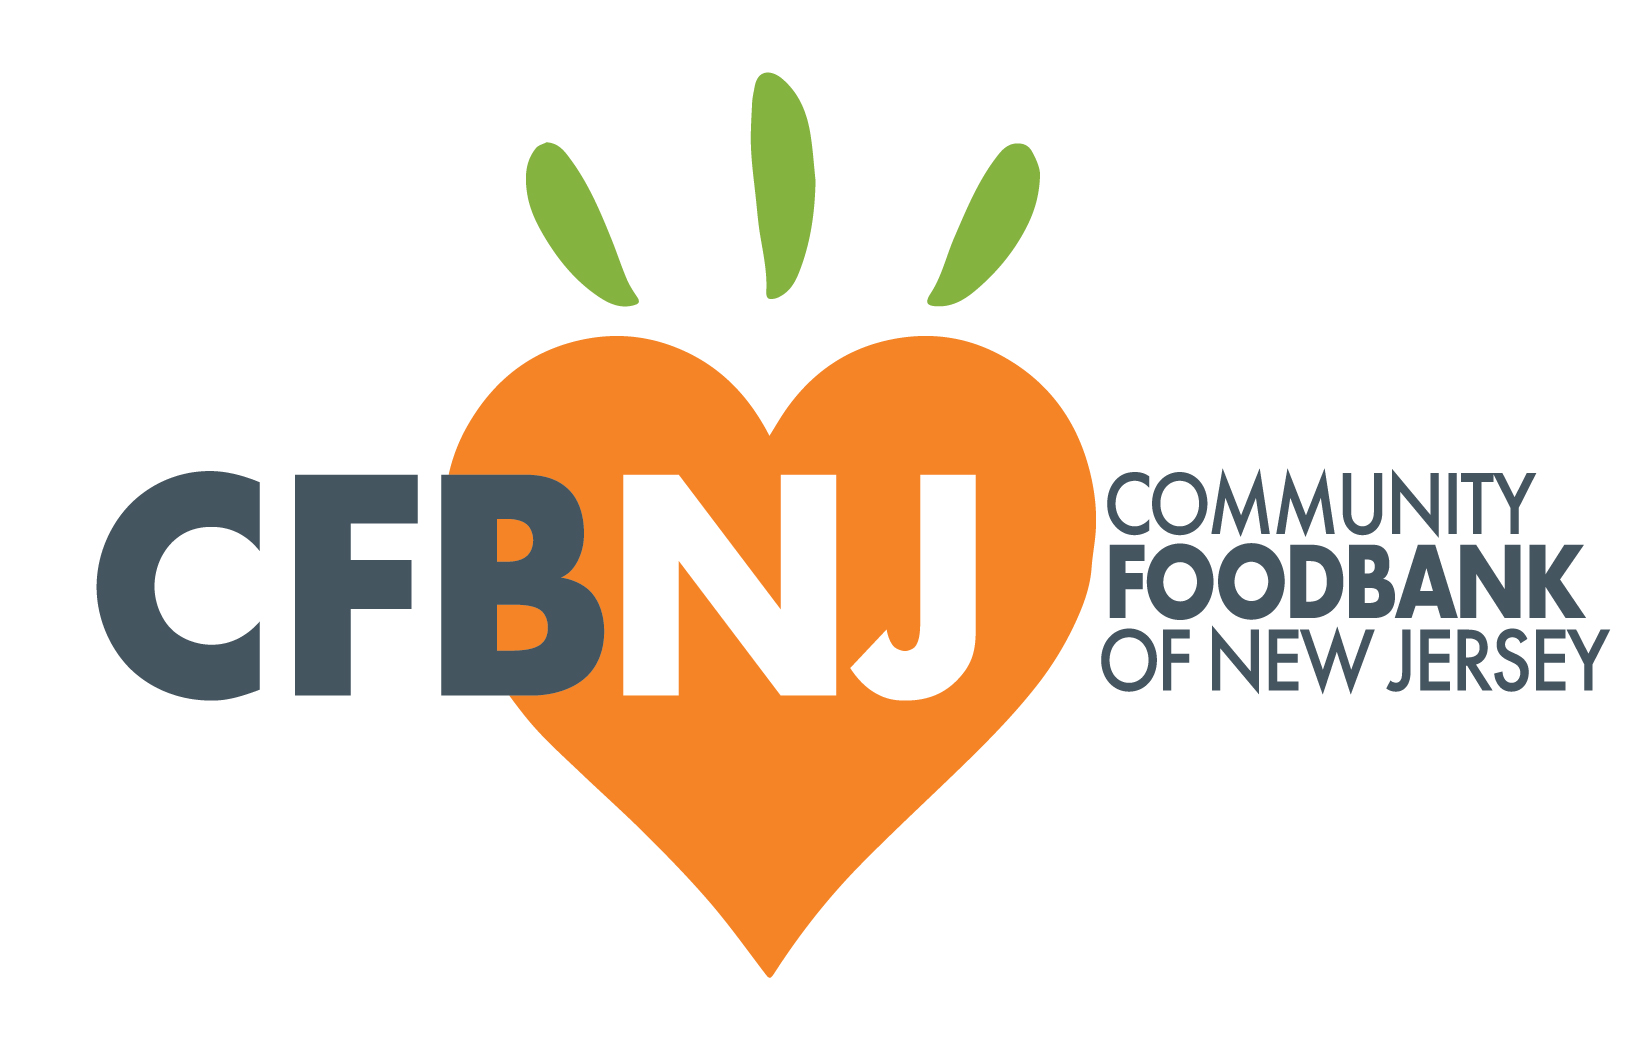 Community Foodbank of New Jersey logo